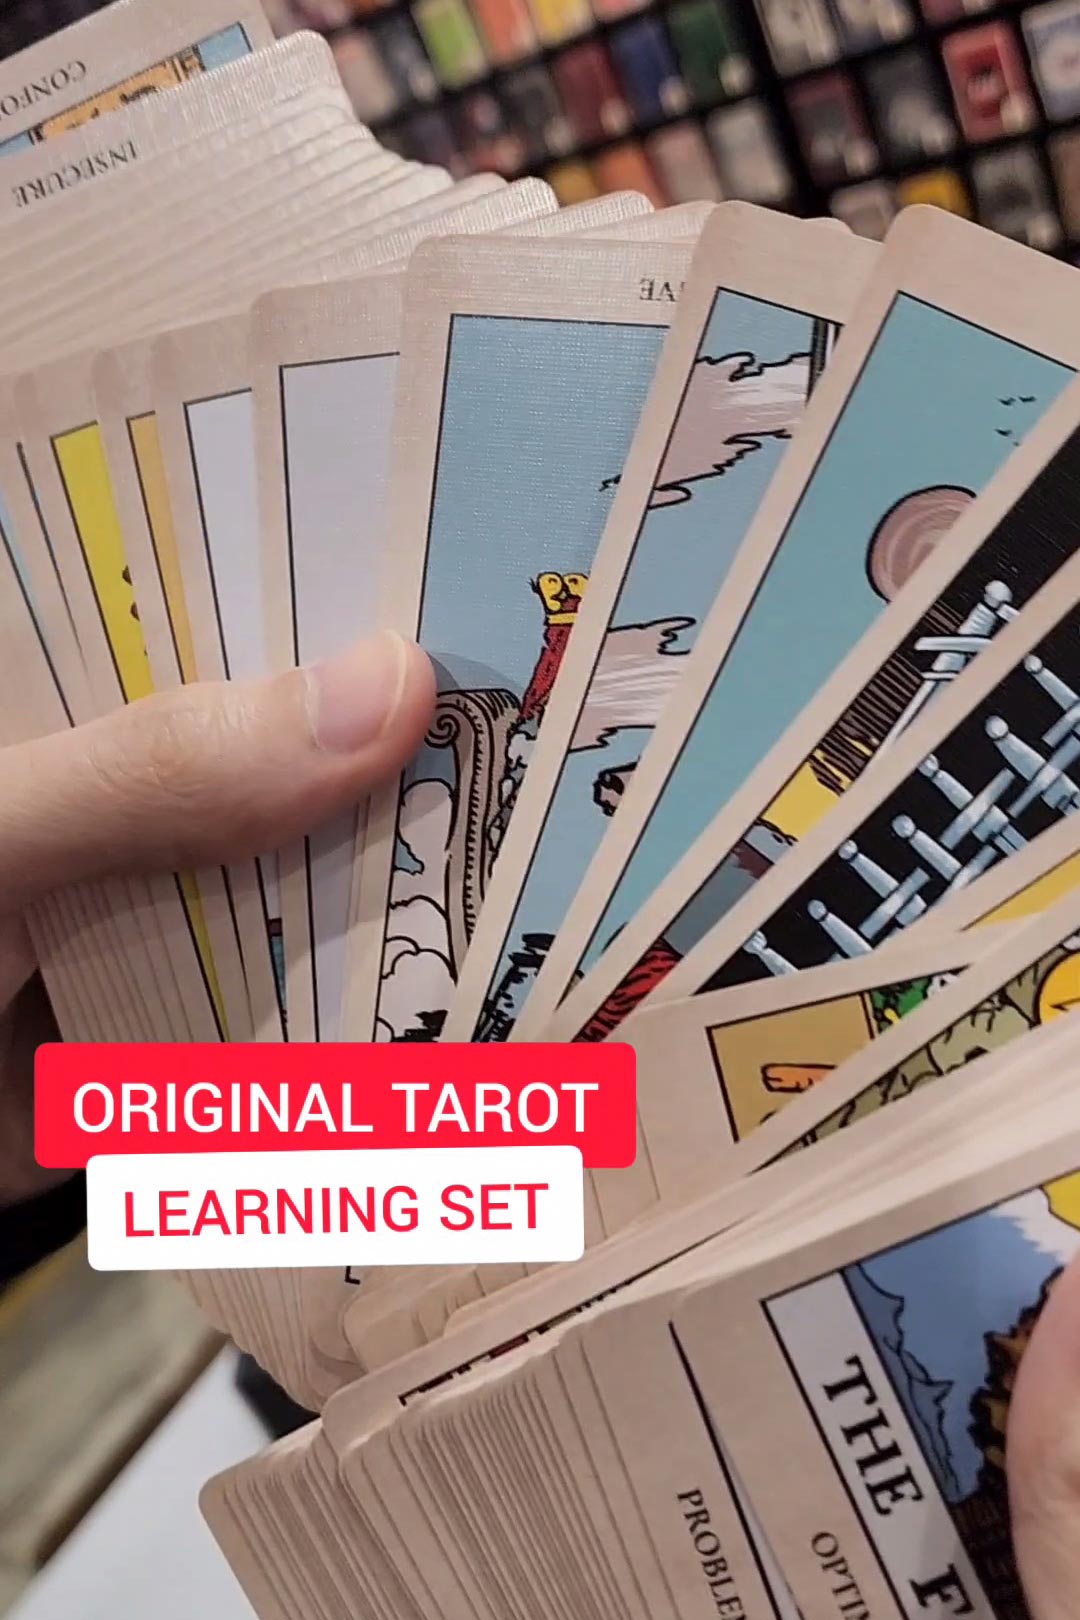 The Original Tarot Learning Edition